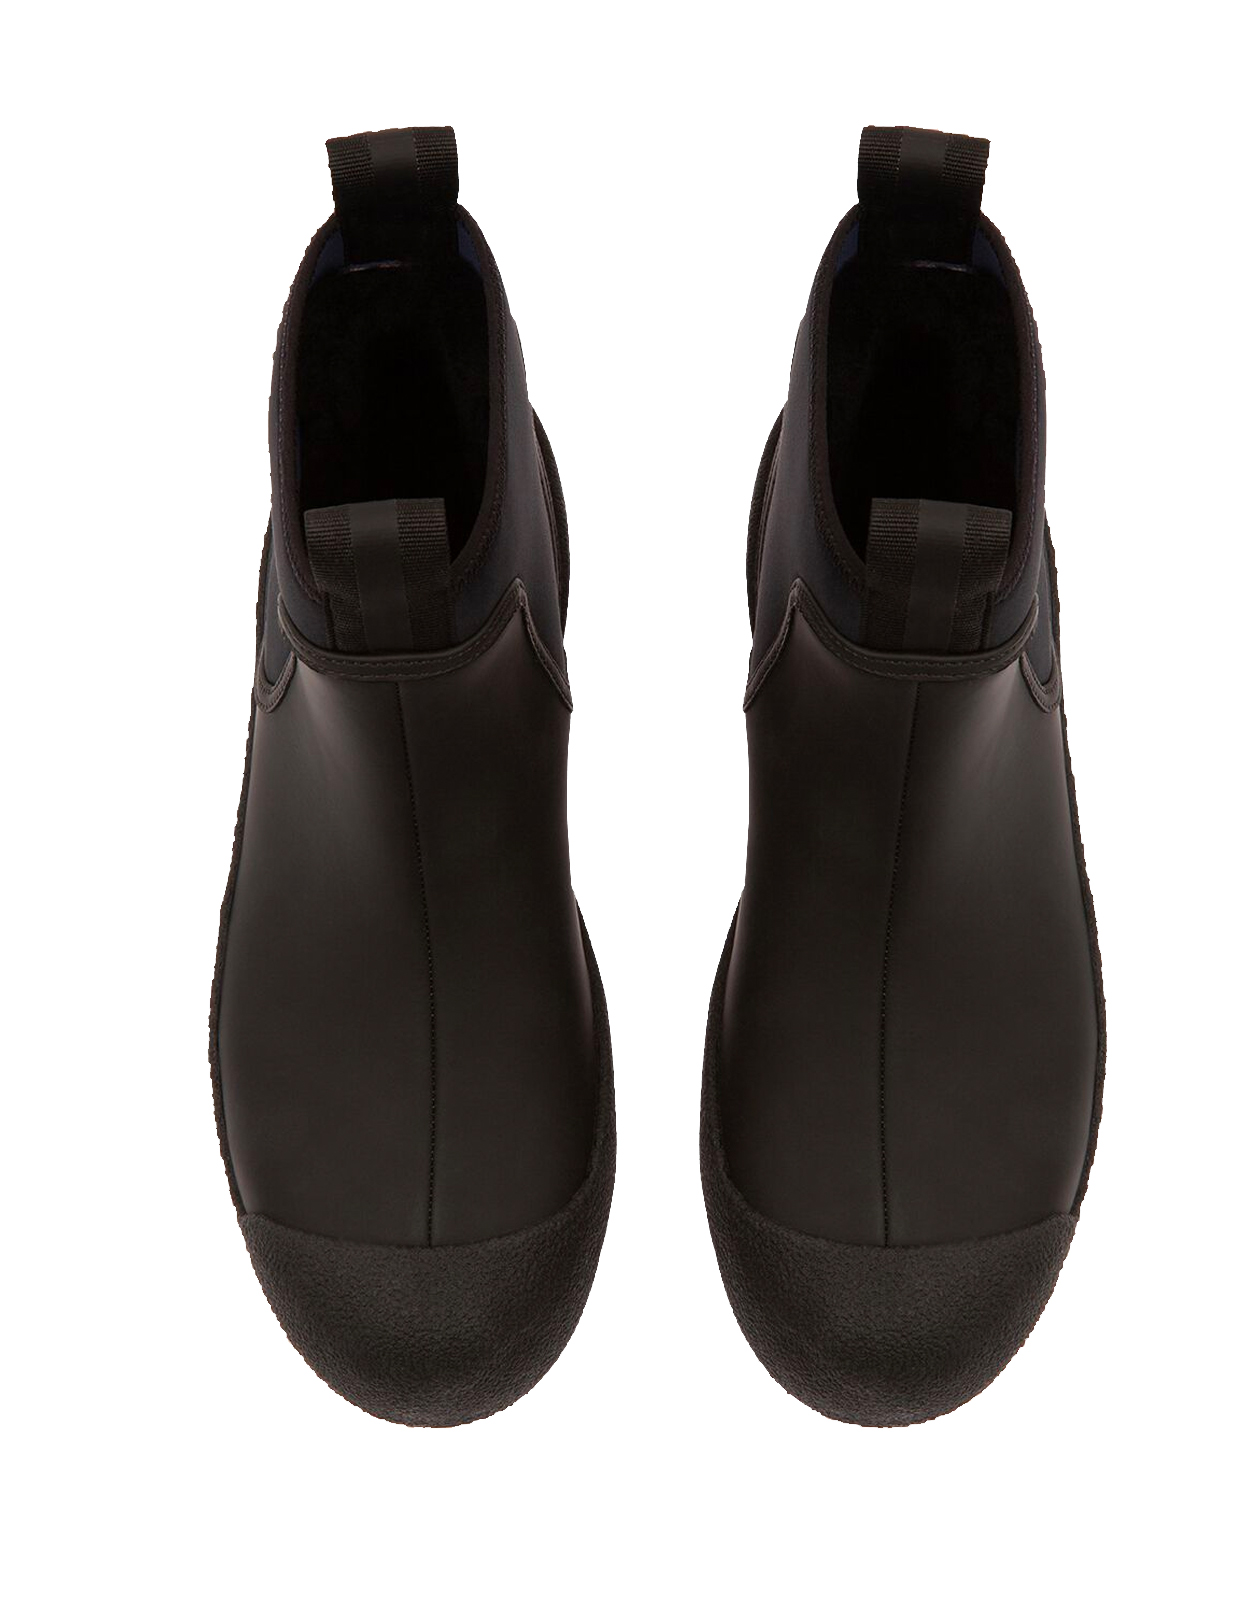 Gadey Leather Boots Black Stl 40